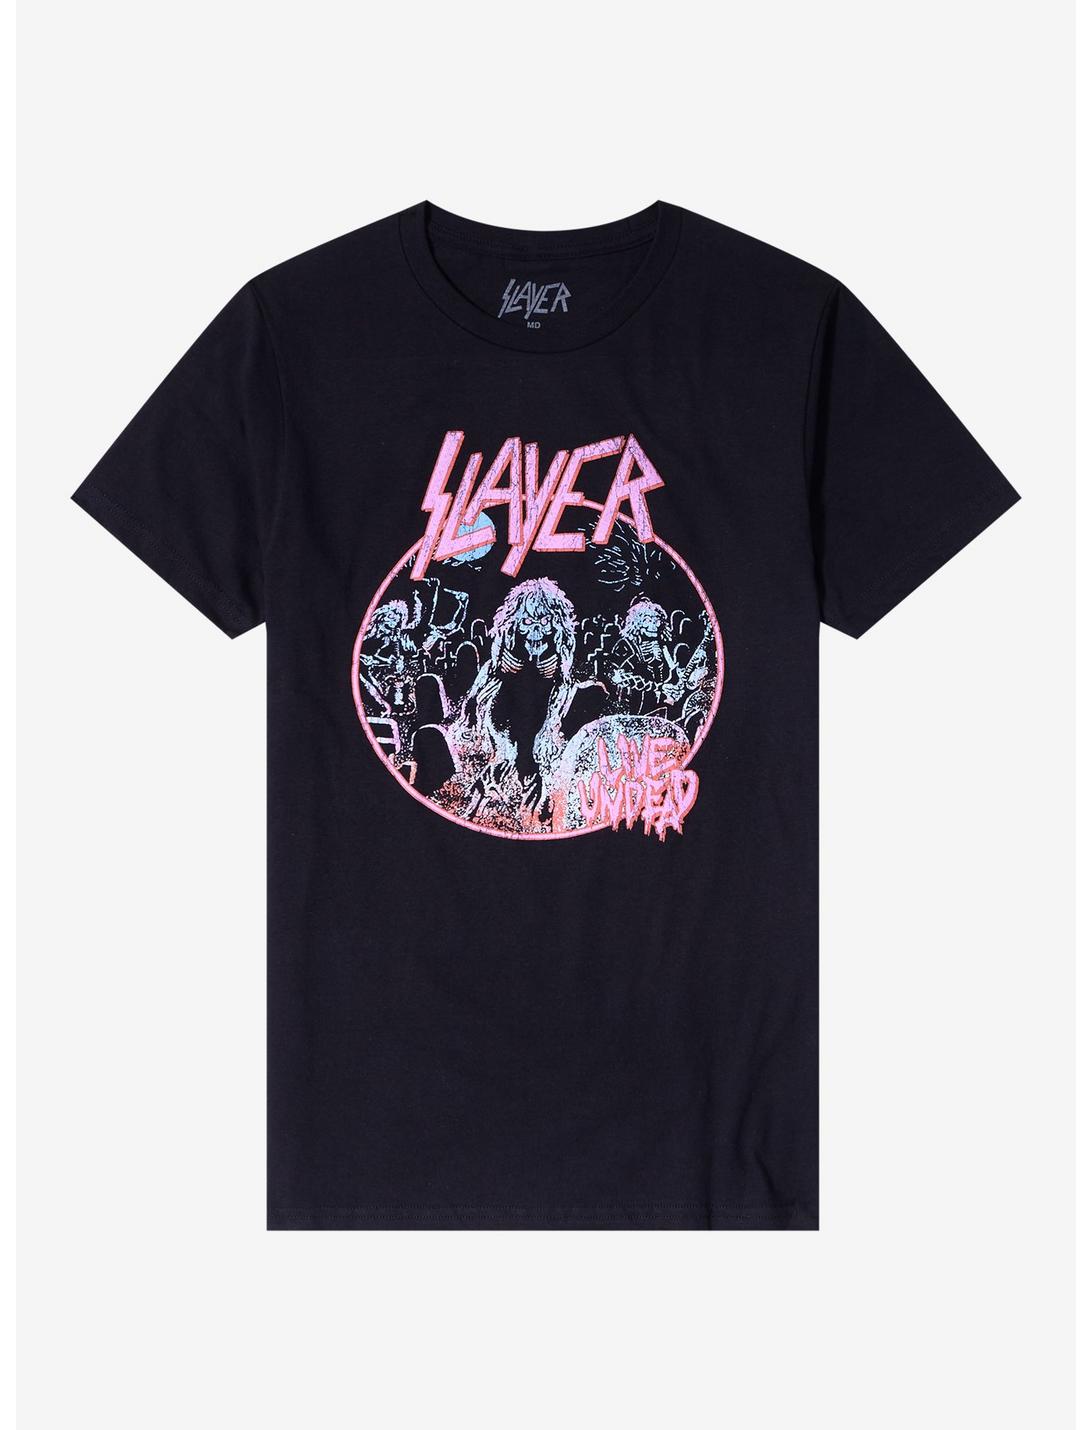 Slayer Live Undead Pastel Boyfriend Fit Girls T-Shirt | Hot Topic